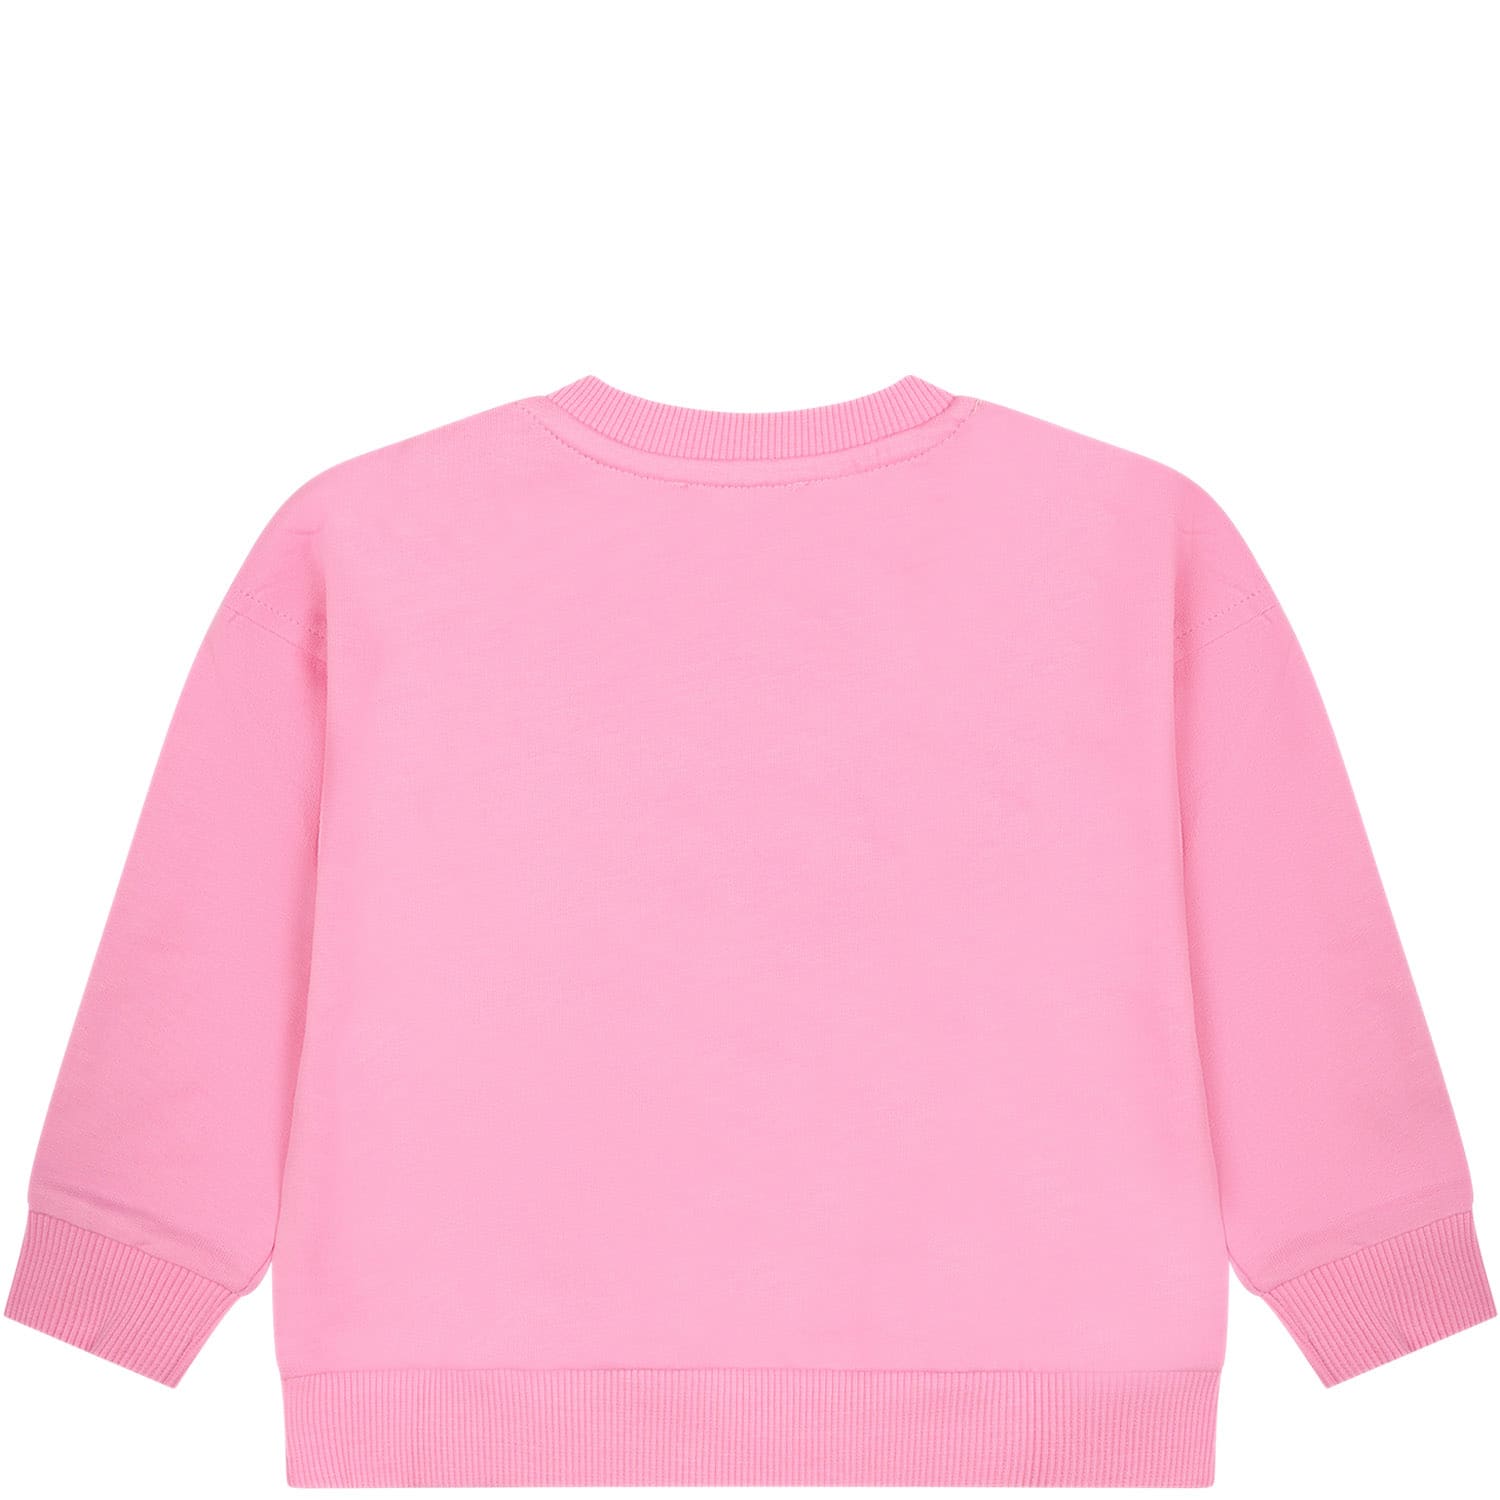 Shop Moschino Pink Sweatshirt For Baby Girl With Teddy Bear